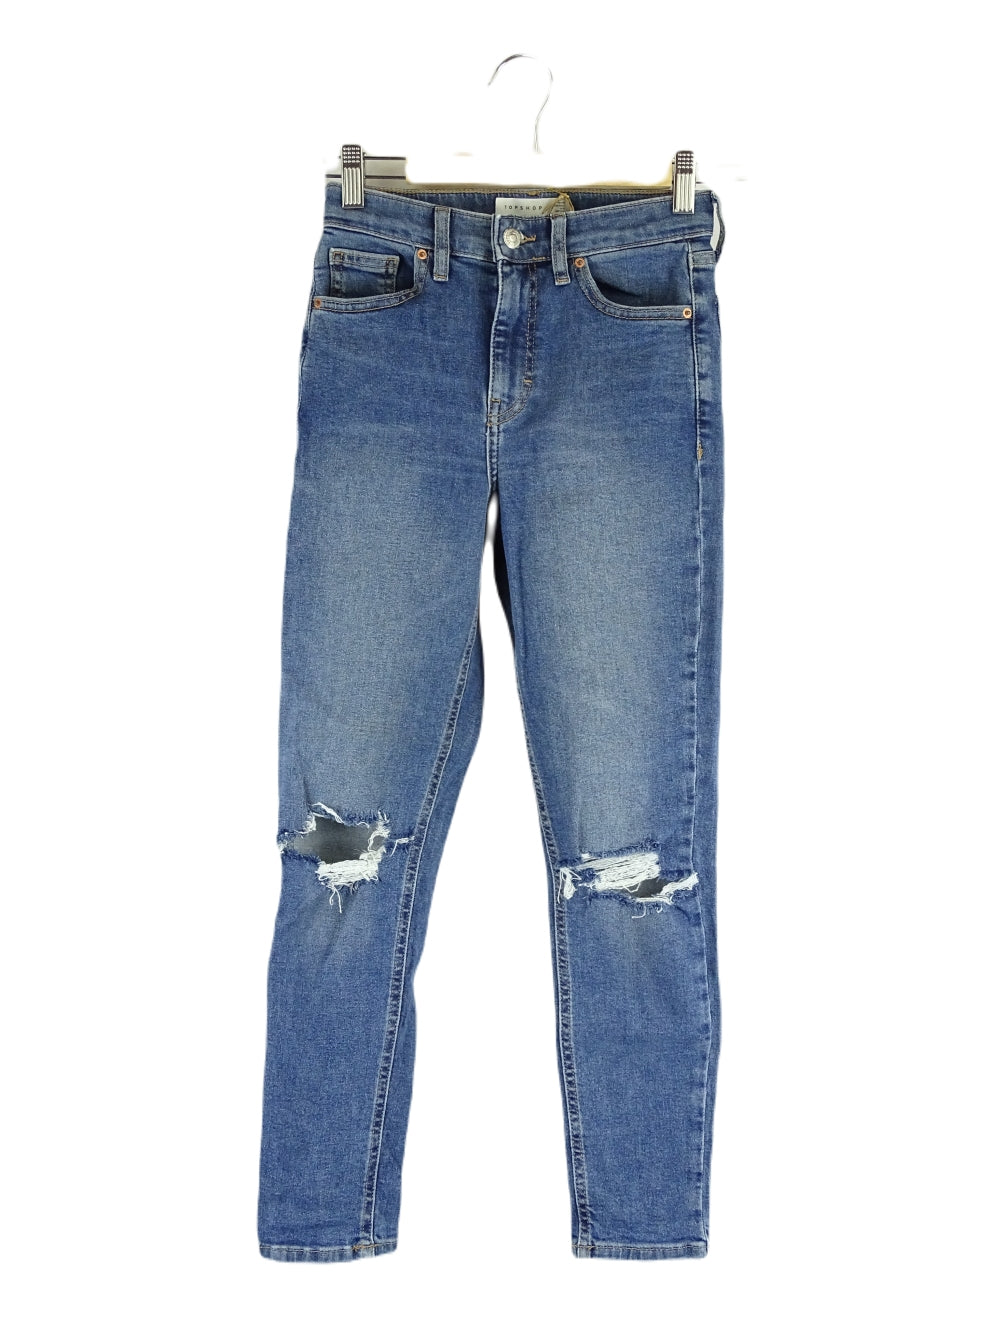 Topshop Blue Skinny Jeans Petite AU 8 / 26